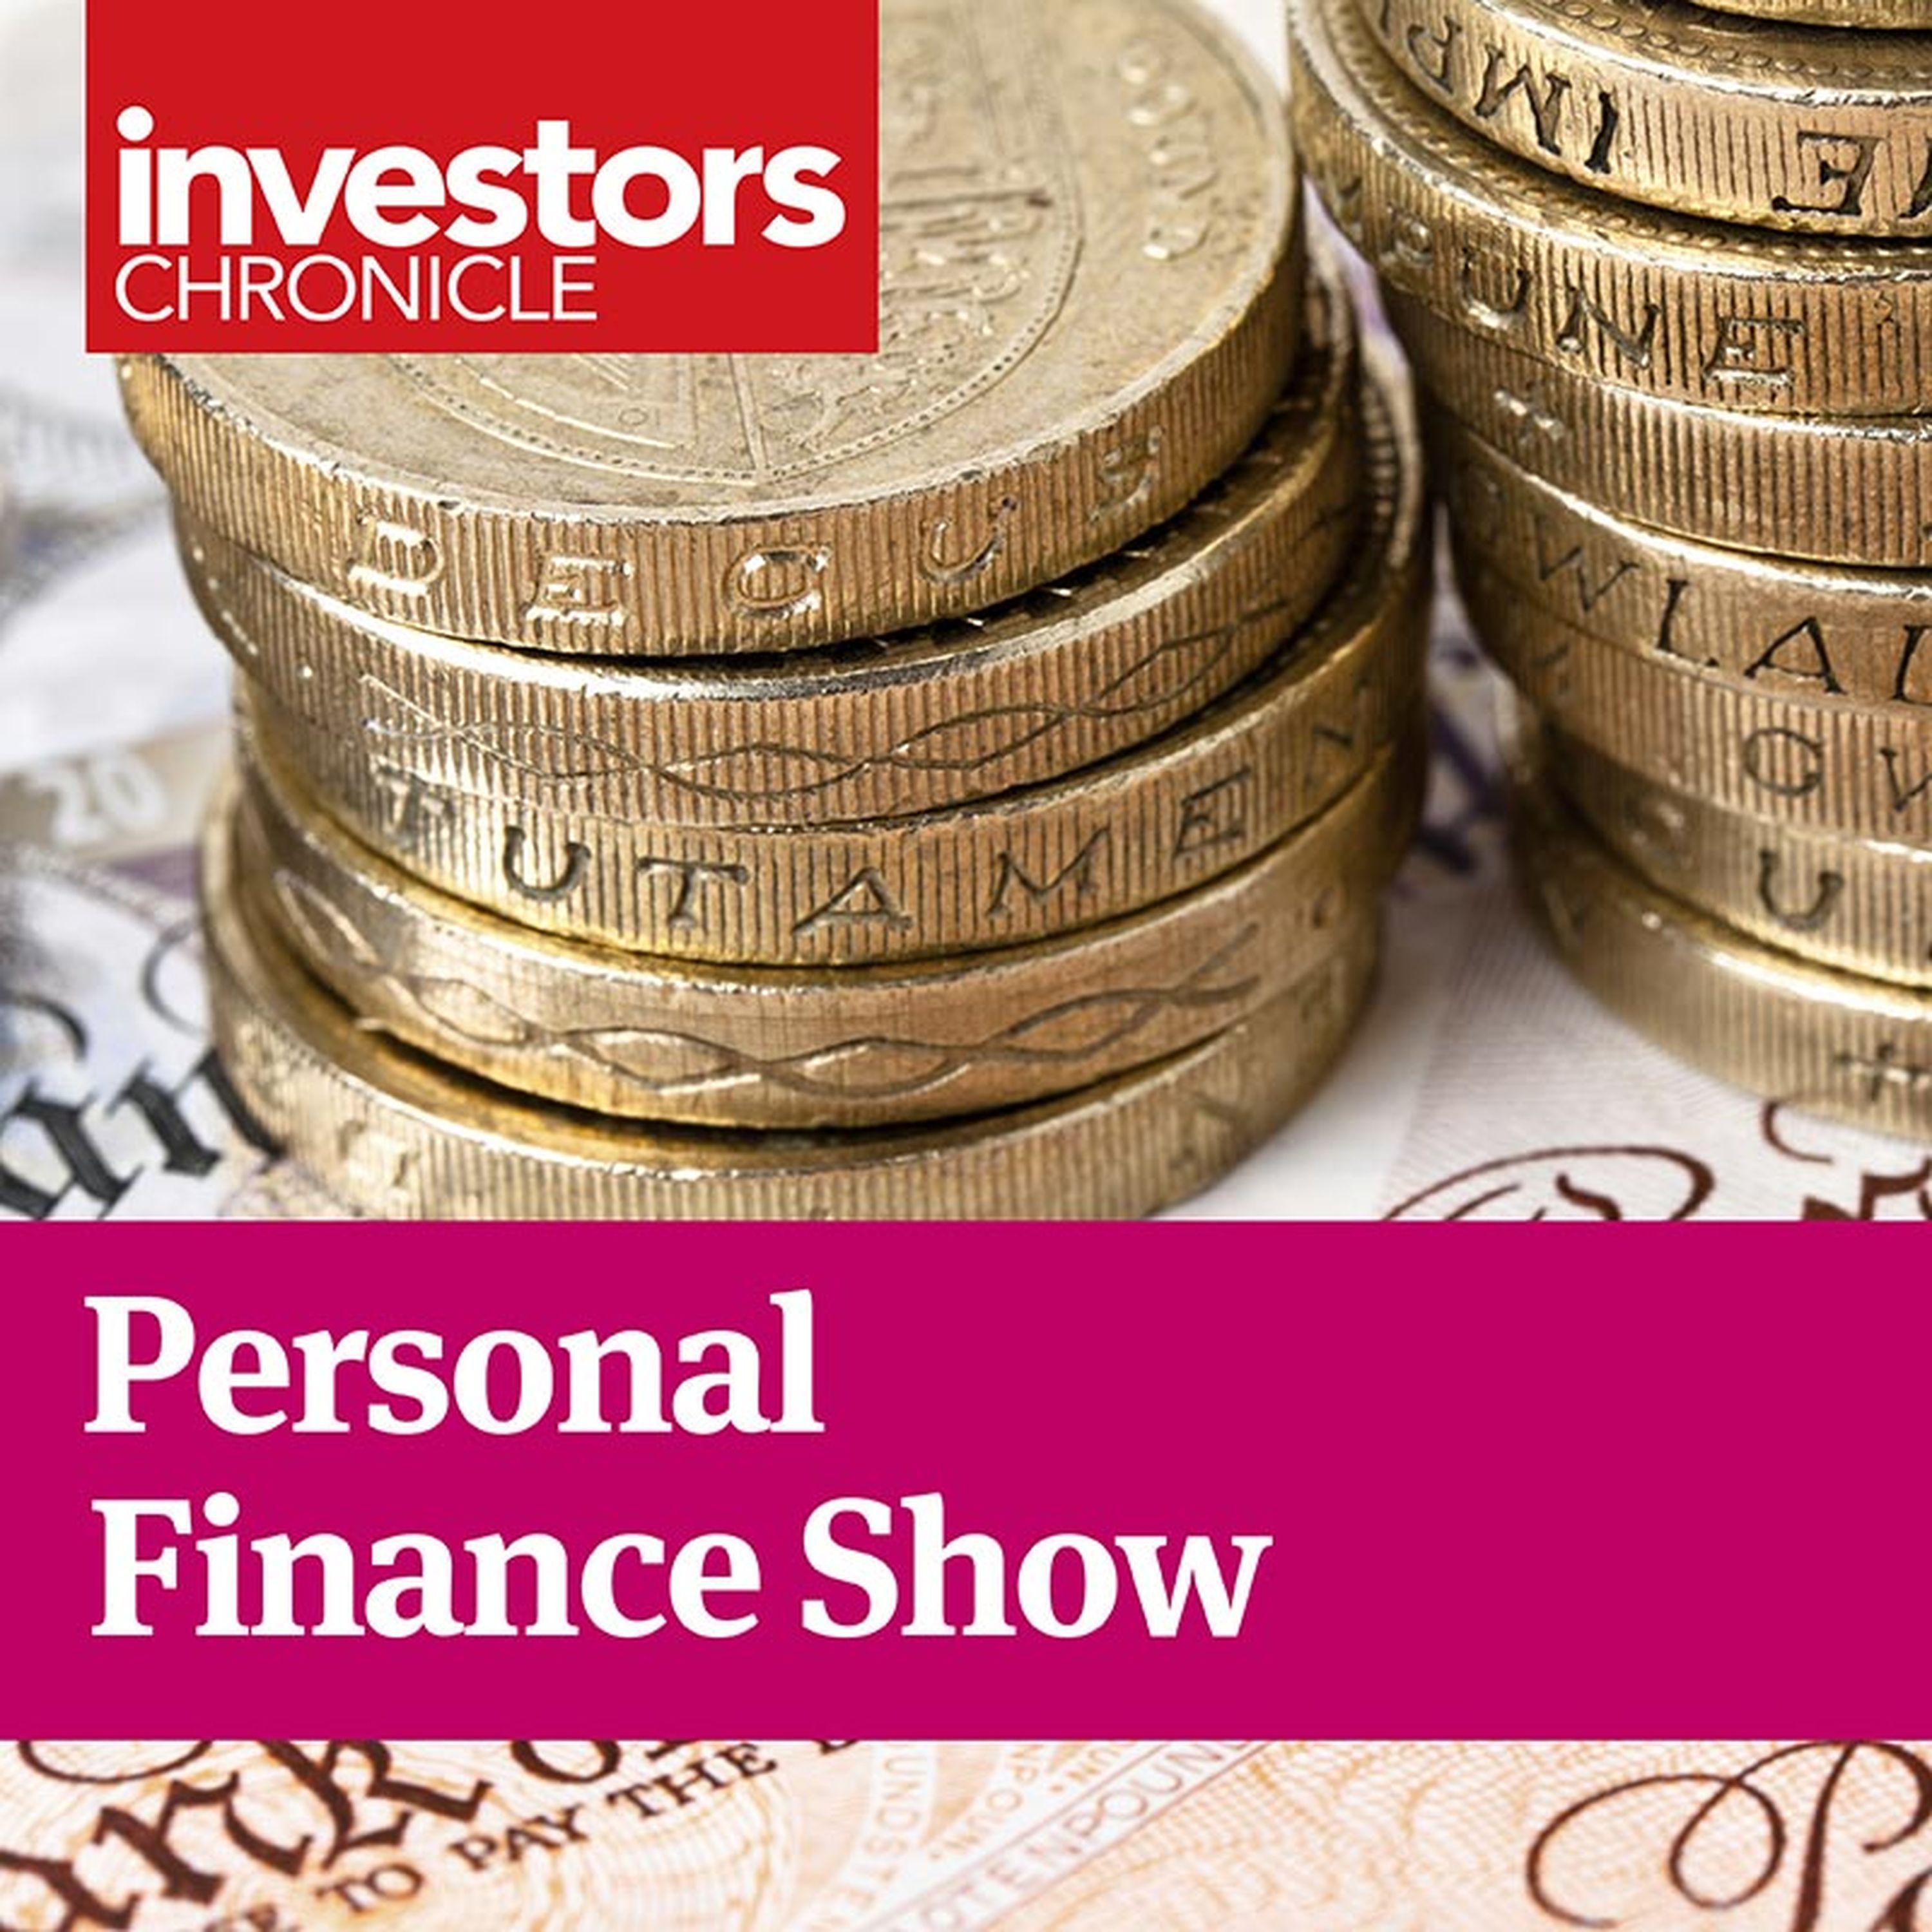 Personal Finance Show 6 January 2017